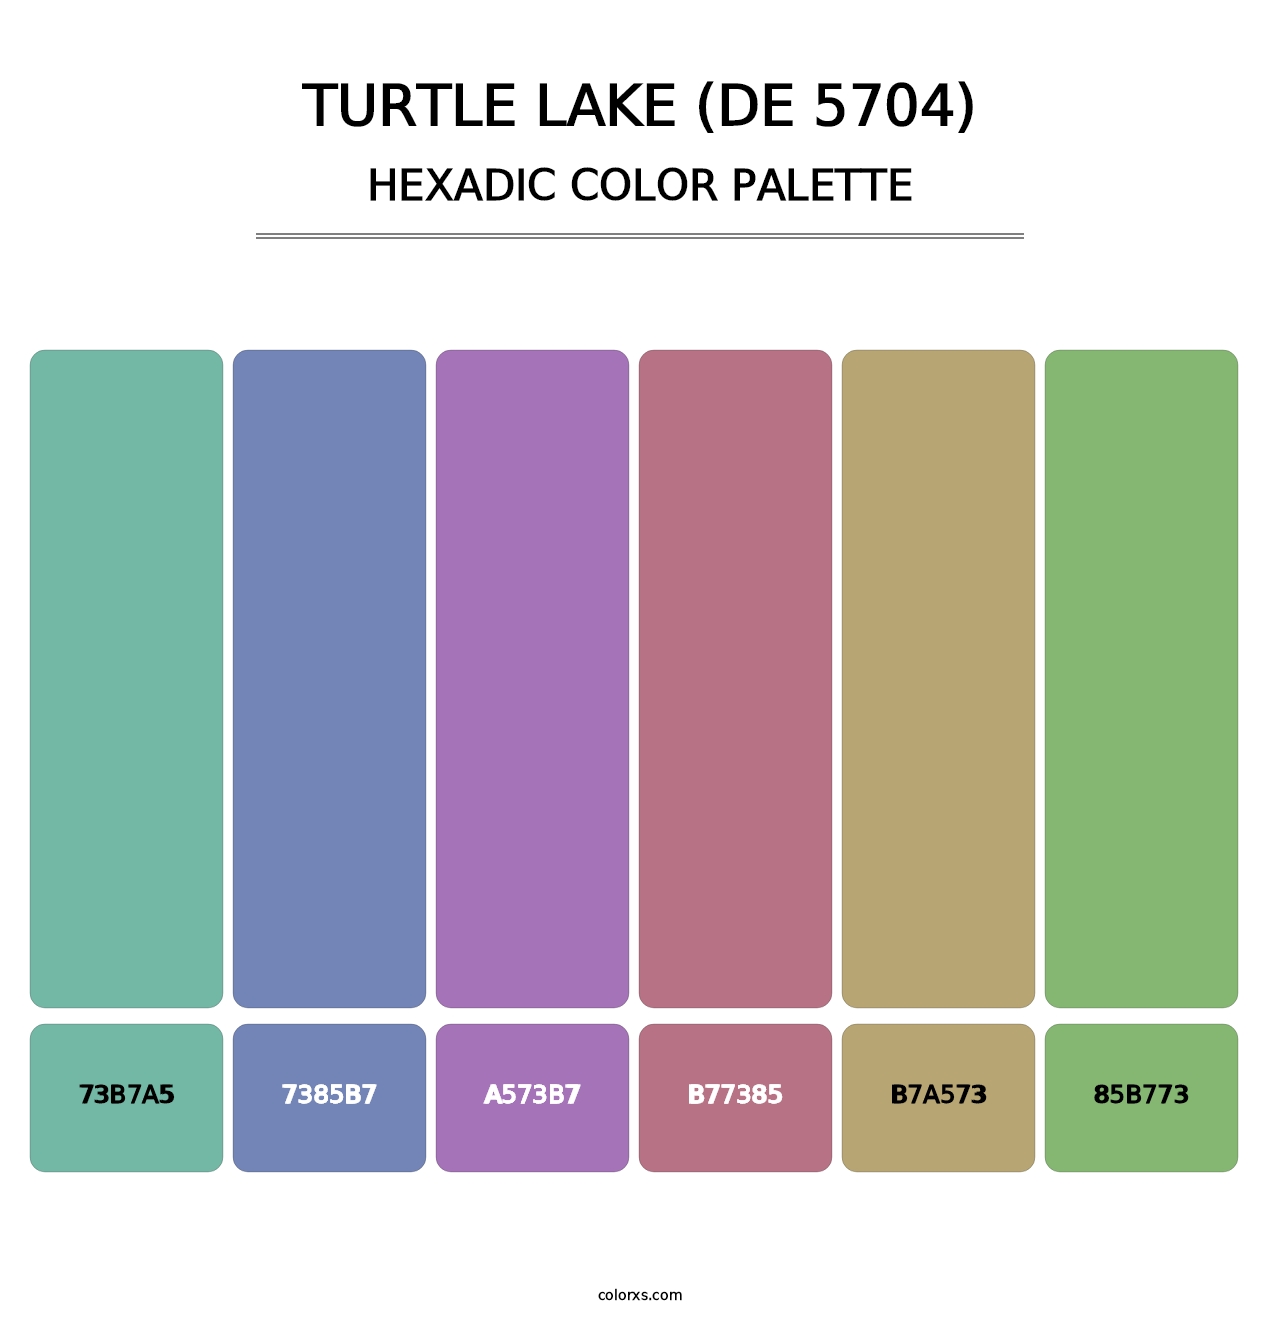 Turtle Lake (DE 5704) - Hexadic Color Palette